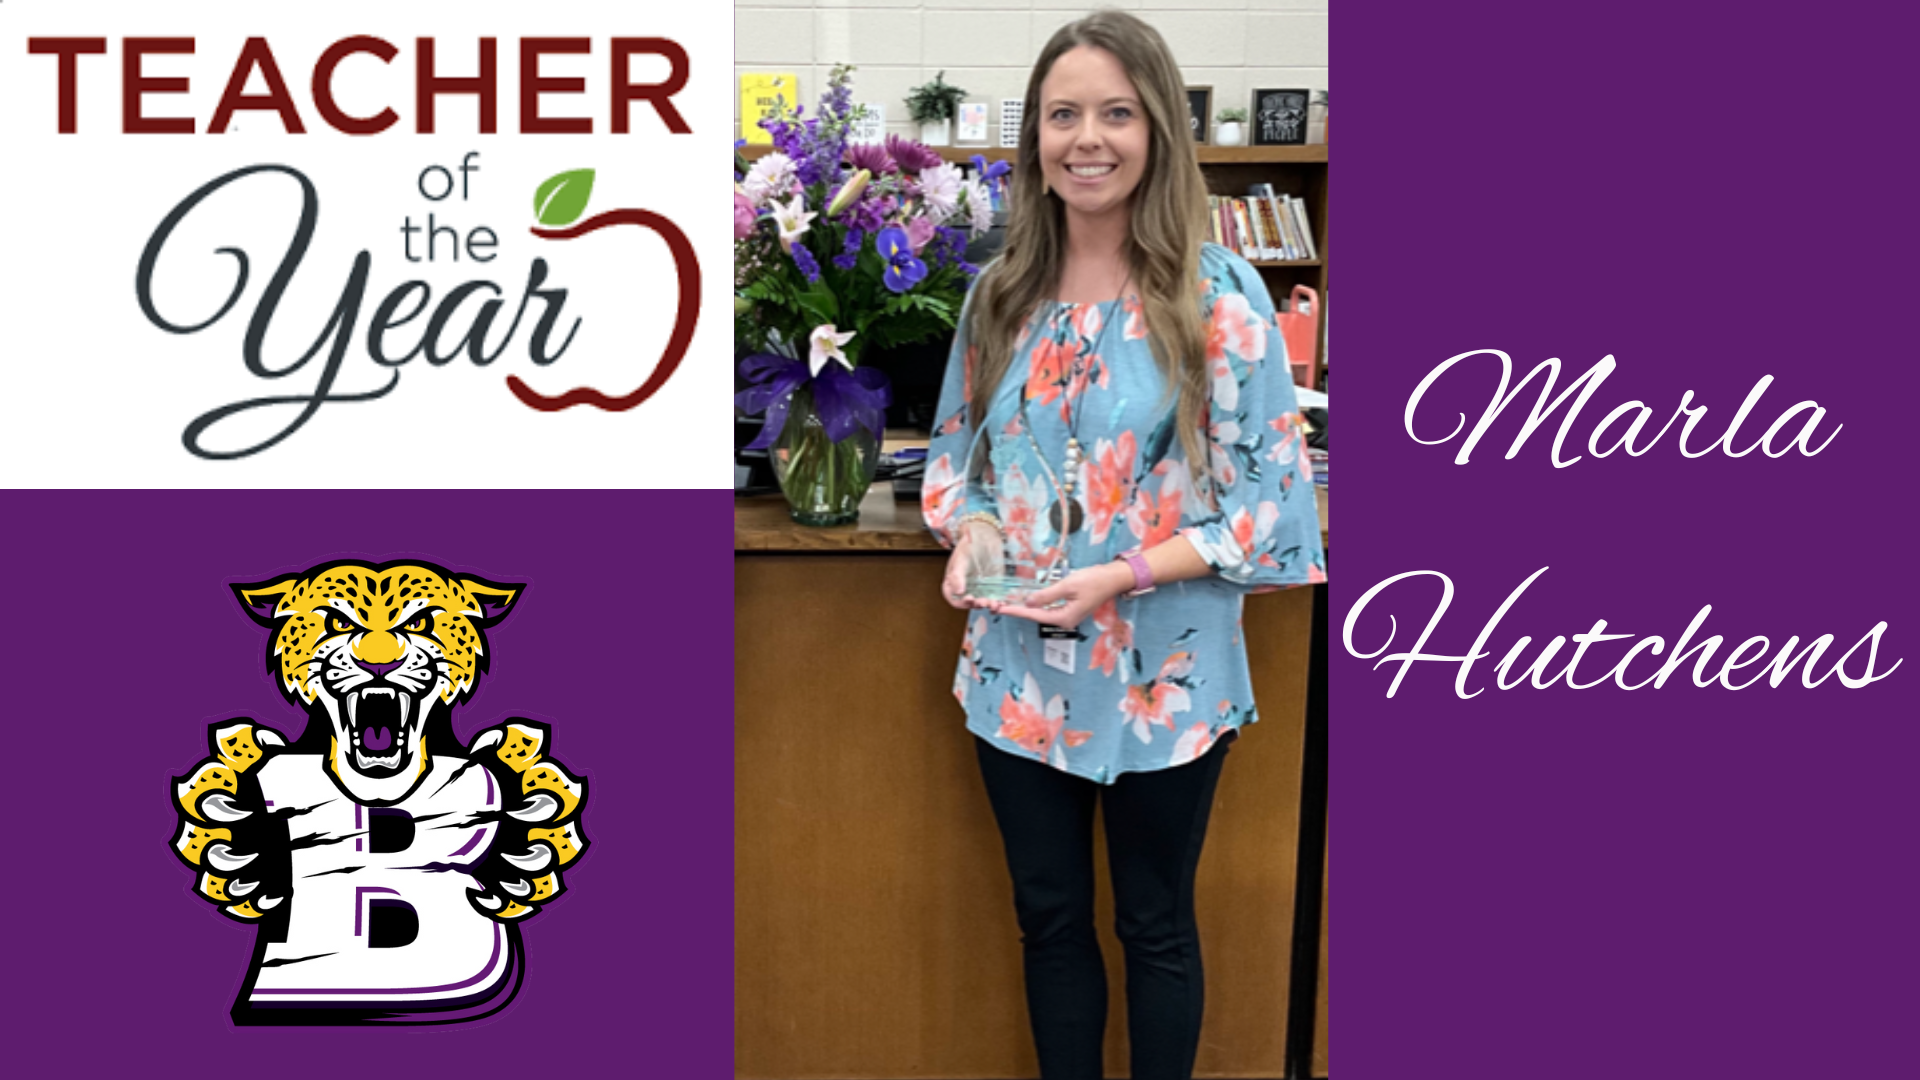 Teacher of the Year - Marla Hutchens